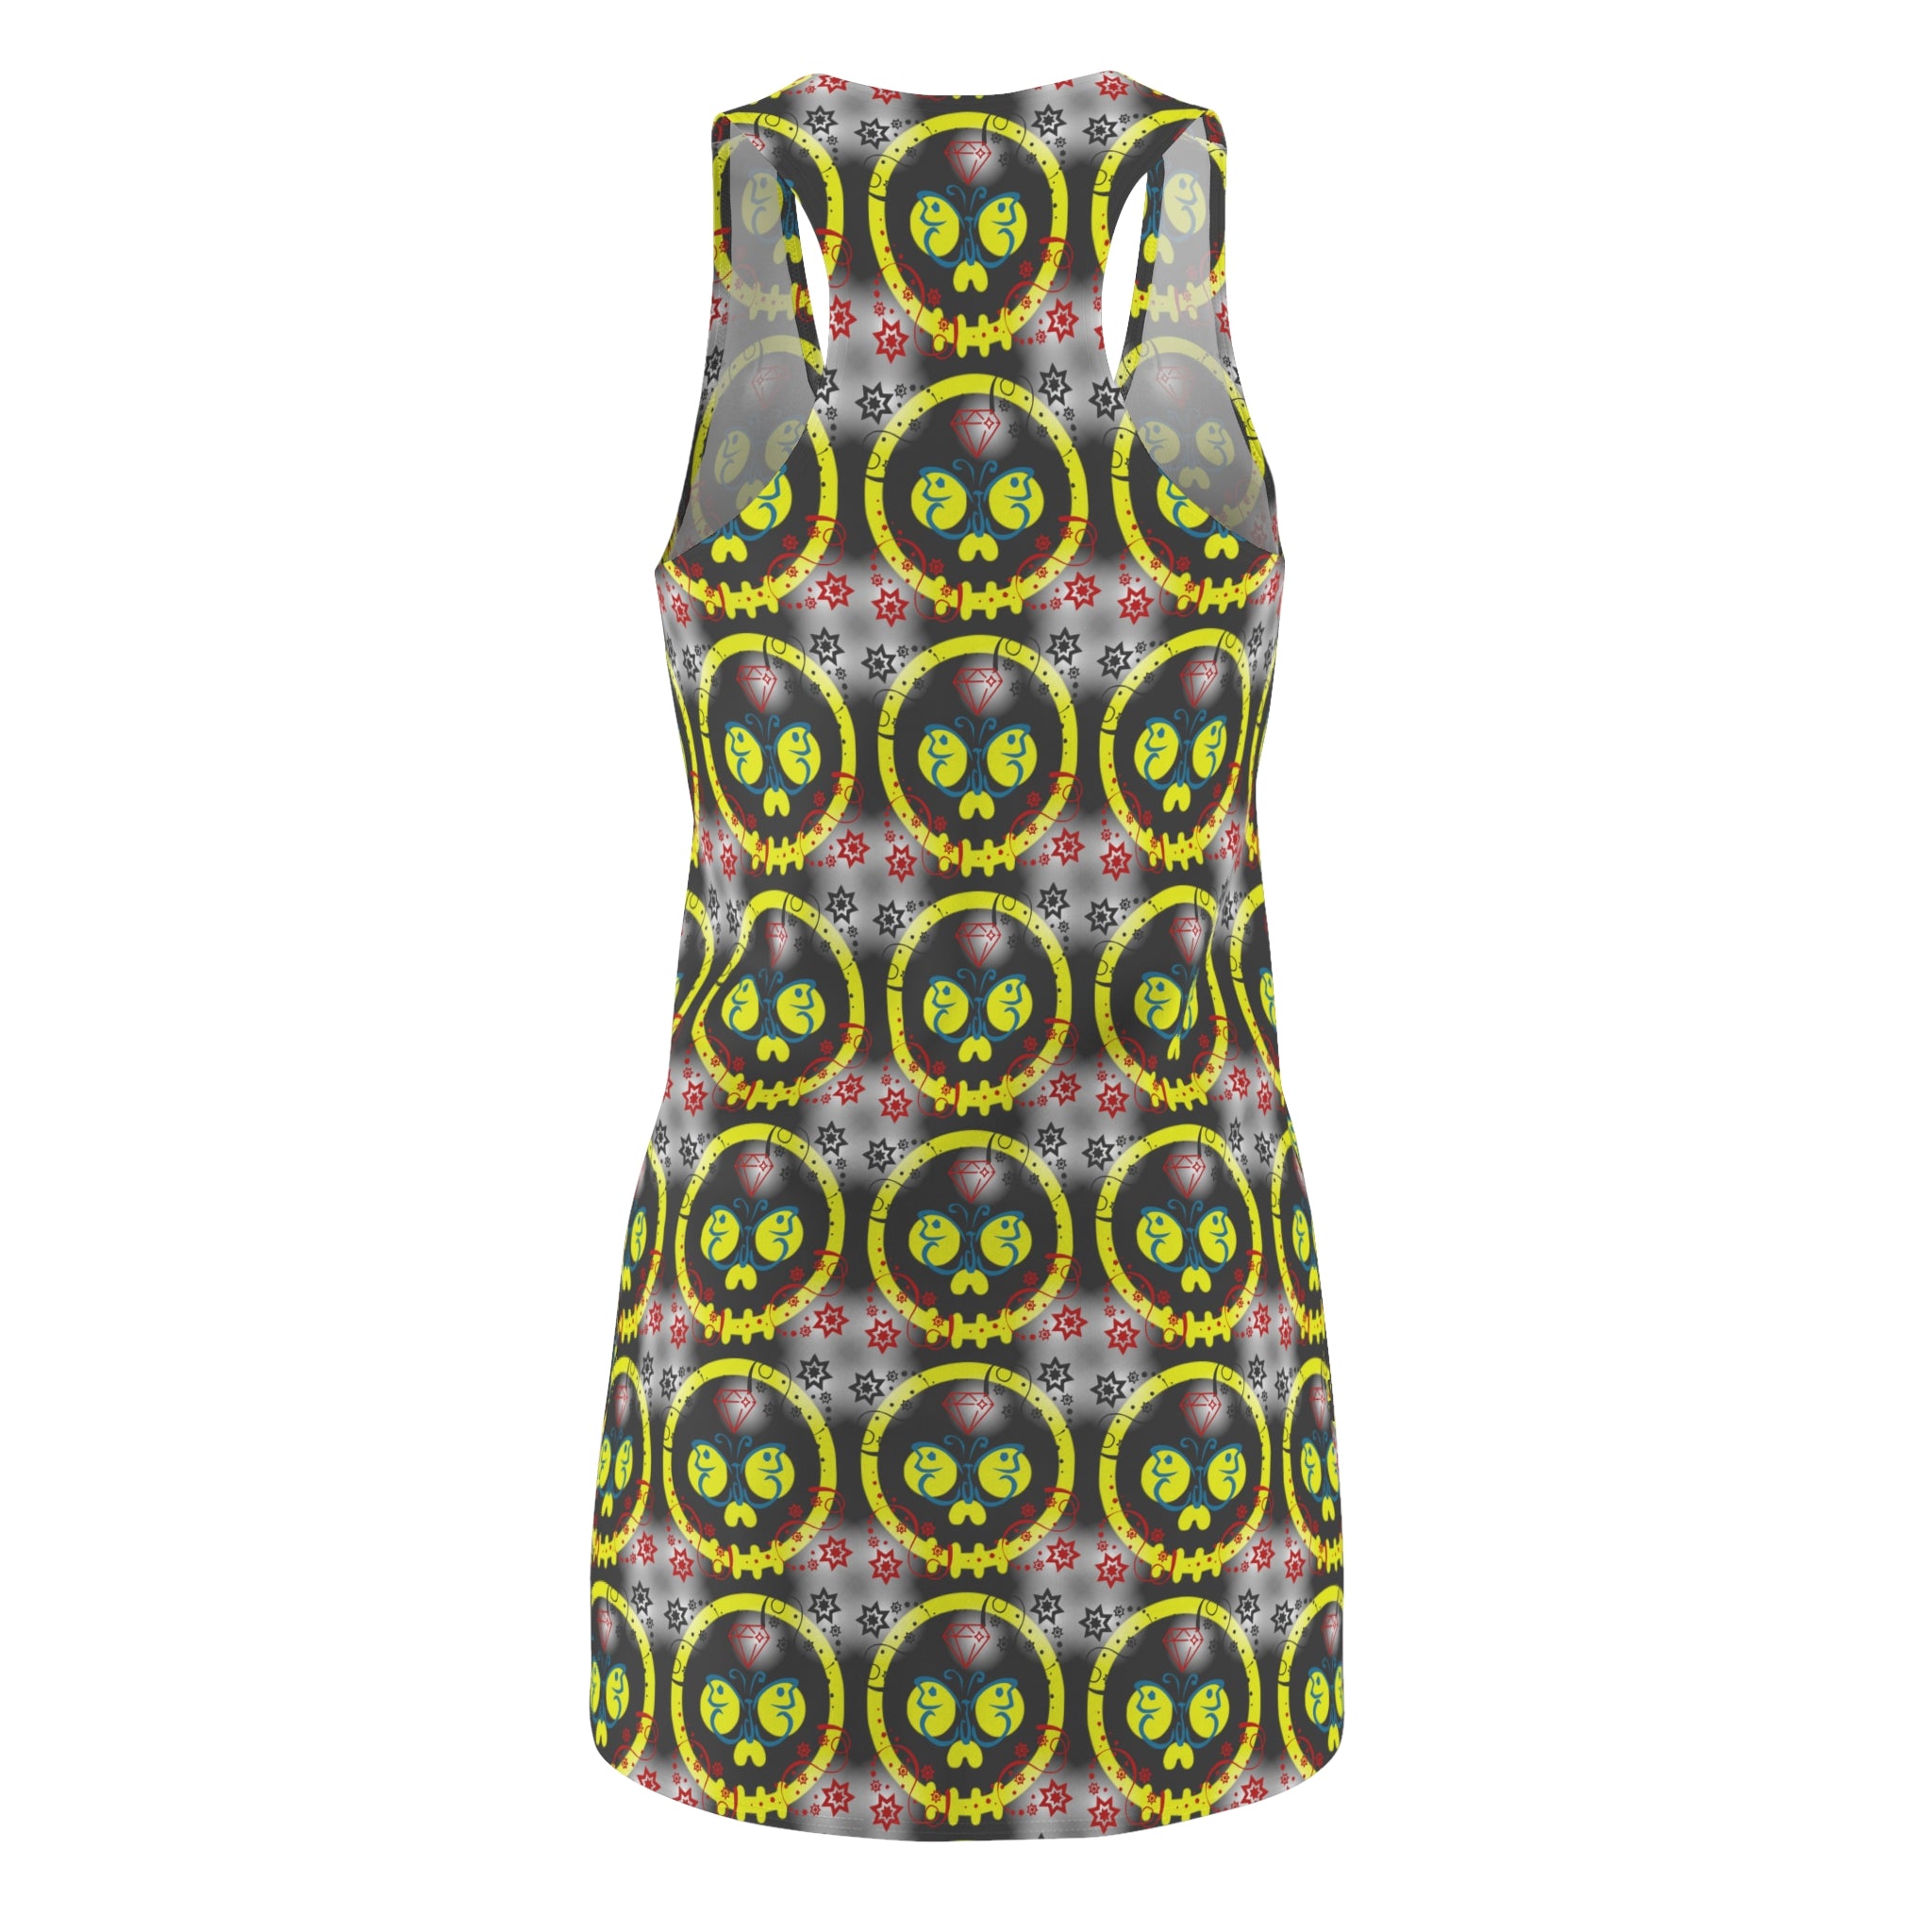 Women's Yellow Skulls Street Wear Printed Racerback Dress